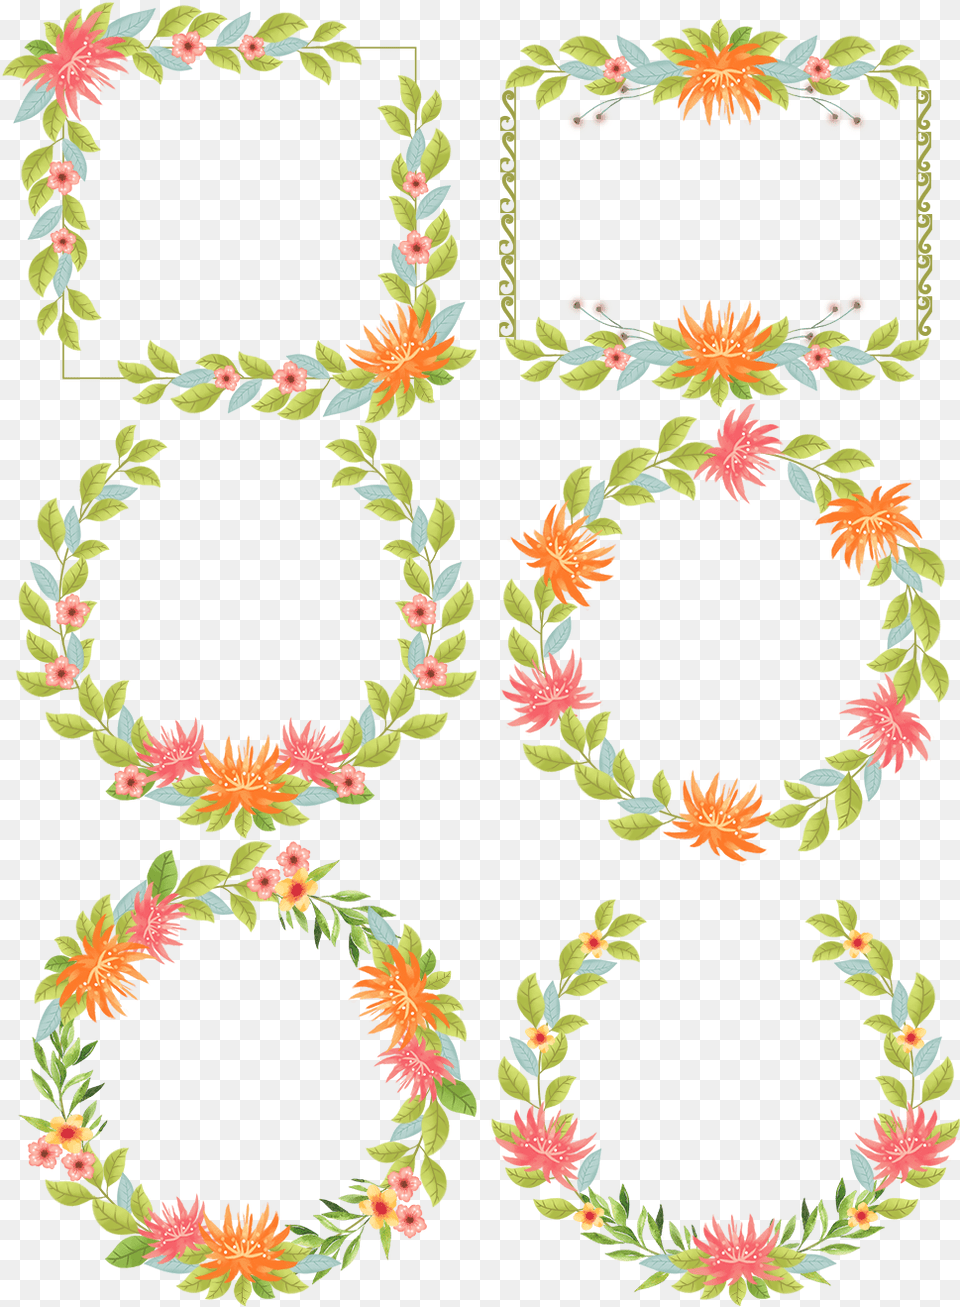 Download Cartoon Plant Flower Border And Psd Floral Plant Border Design, Pattern, Graphics, Flower Arrangement, Floral Design Free Png